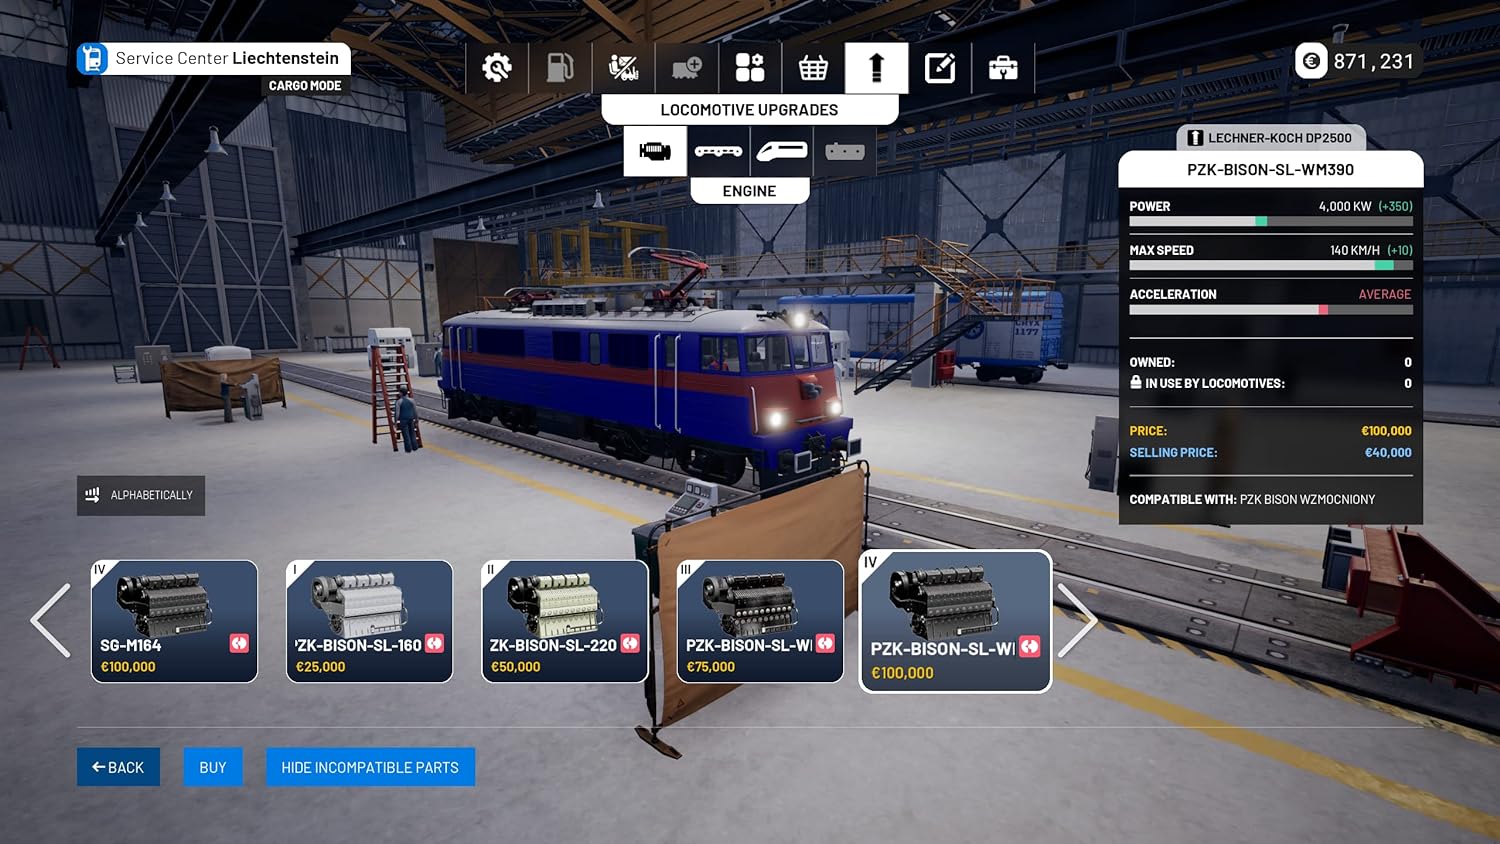 Train Life: A Railway Simulator (Xbox)